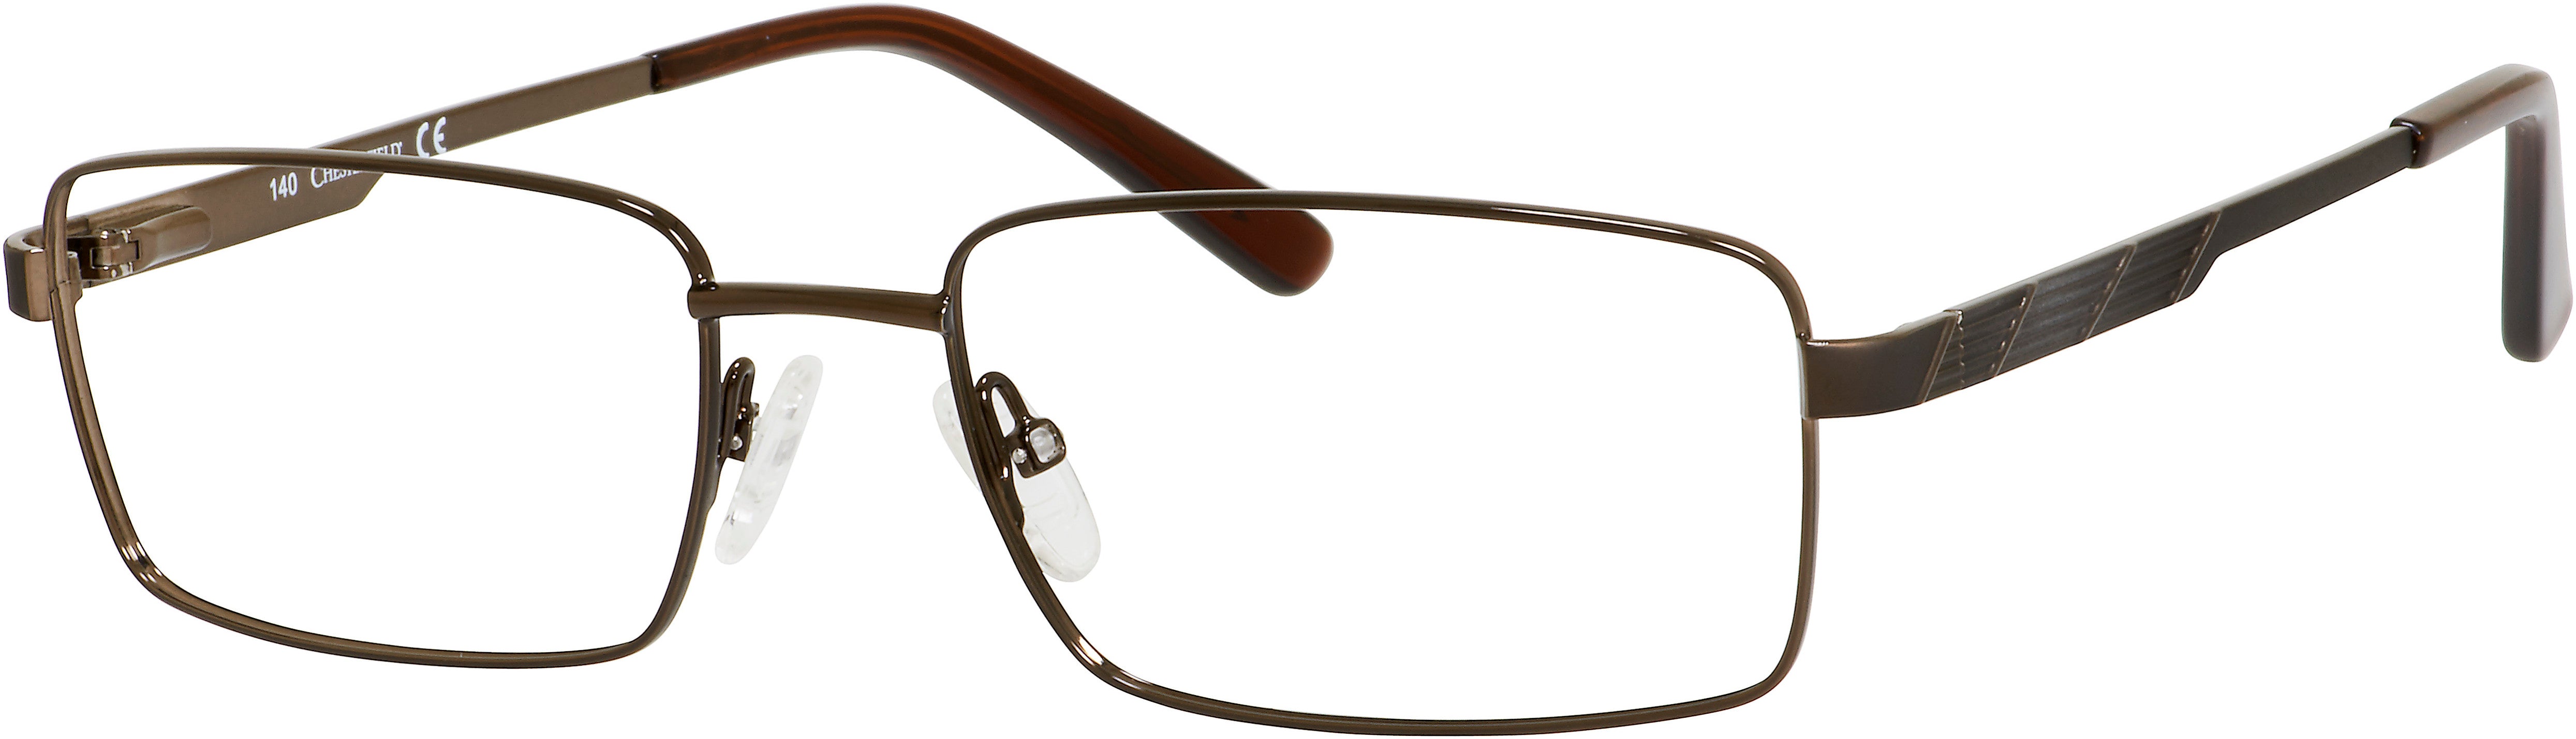  Chesterfield 31 XL Rectangular Eyeglasses 0FN2-0FN2  Brown (00 Demo Lens)